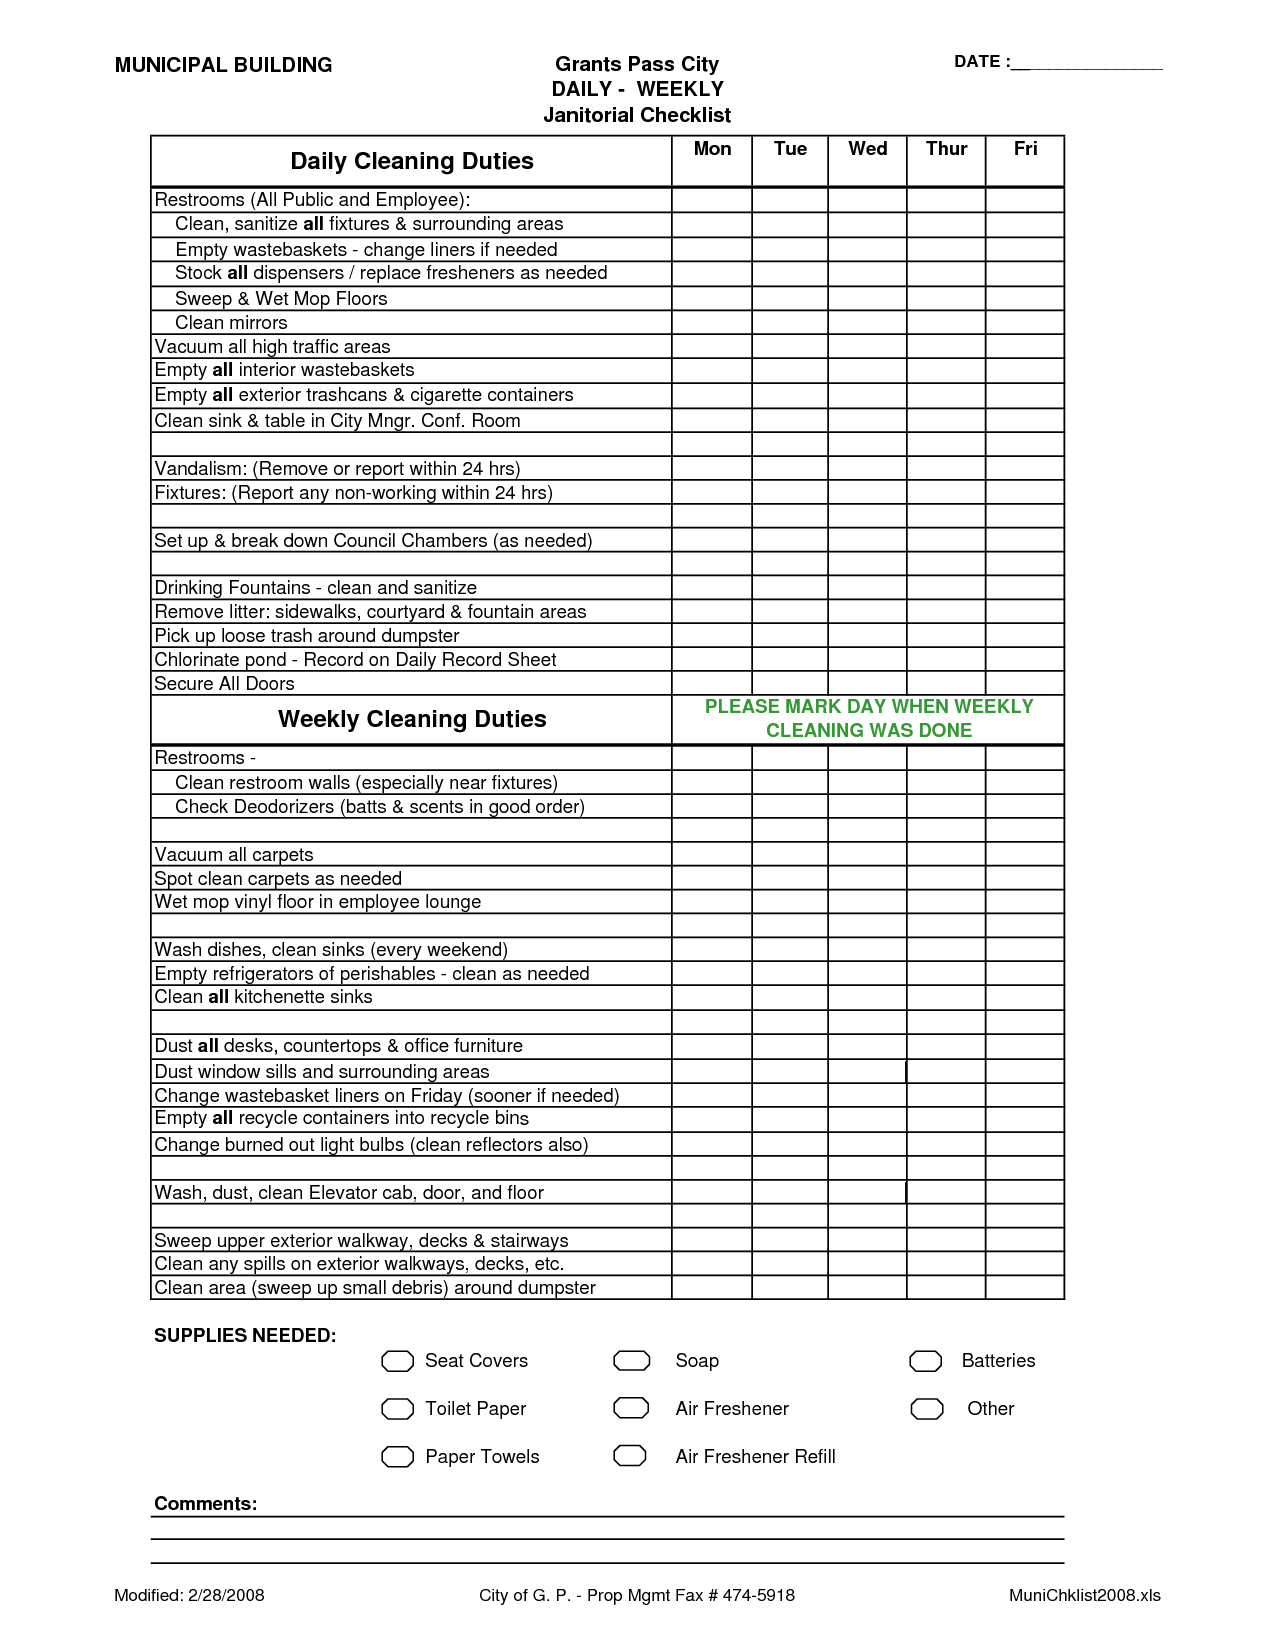 office cleaning list checklist | Janitorial Supplies Checklist 